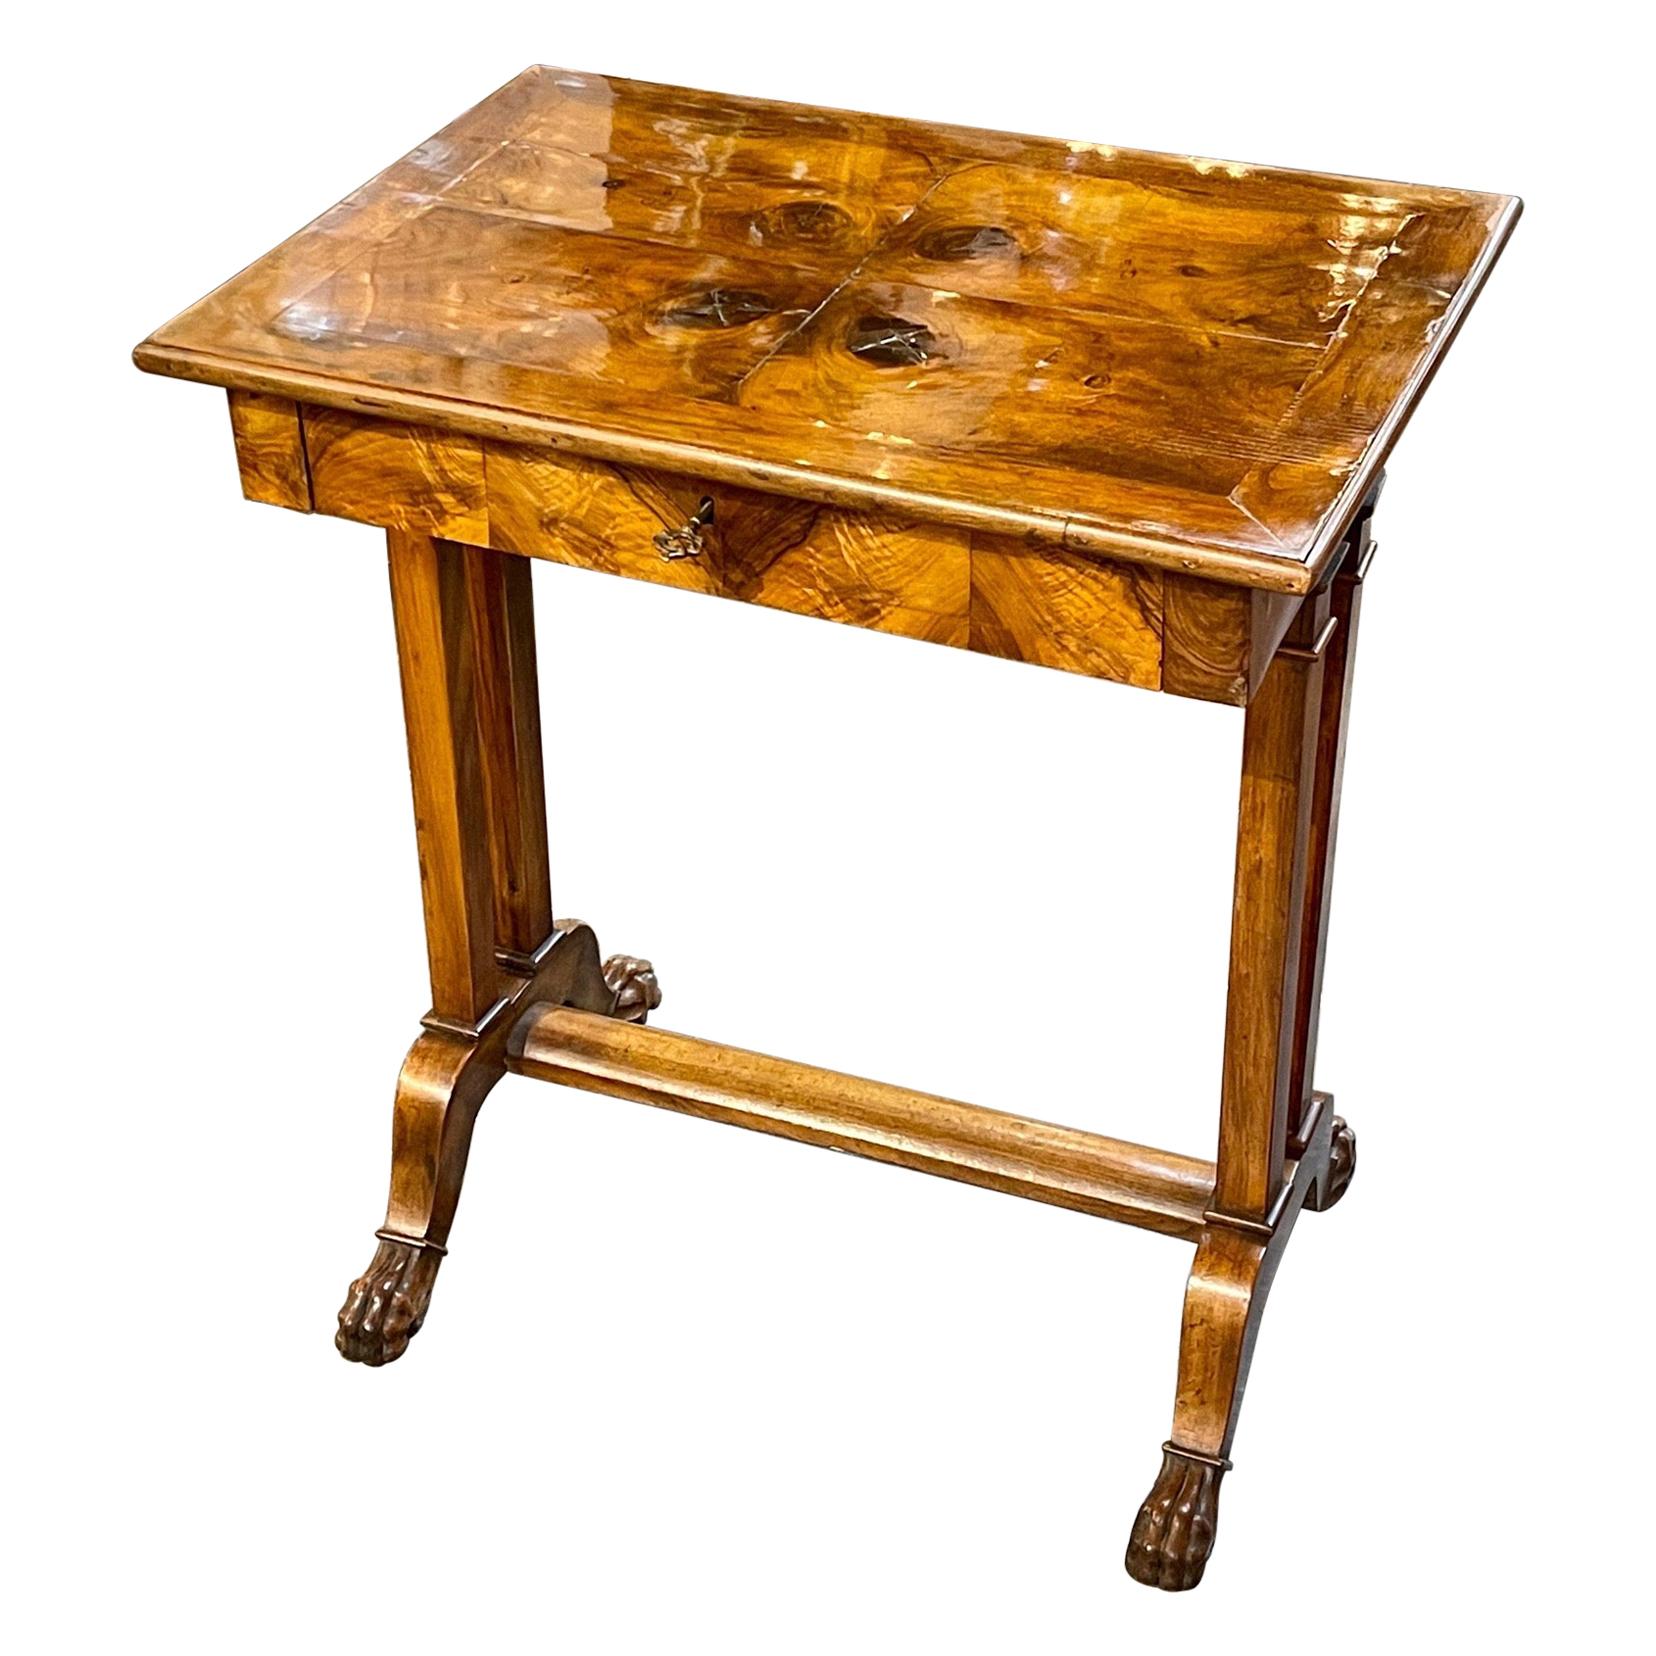 19th Century Italian Walnut Side Table